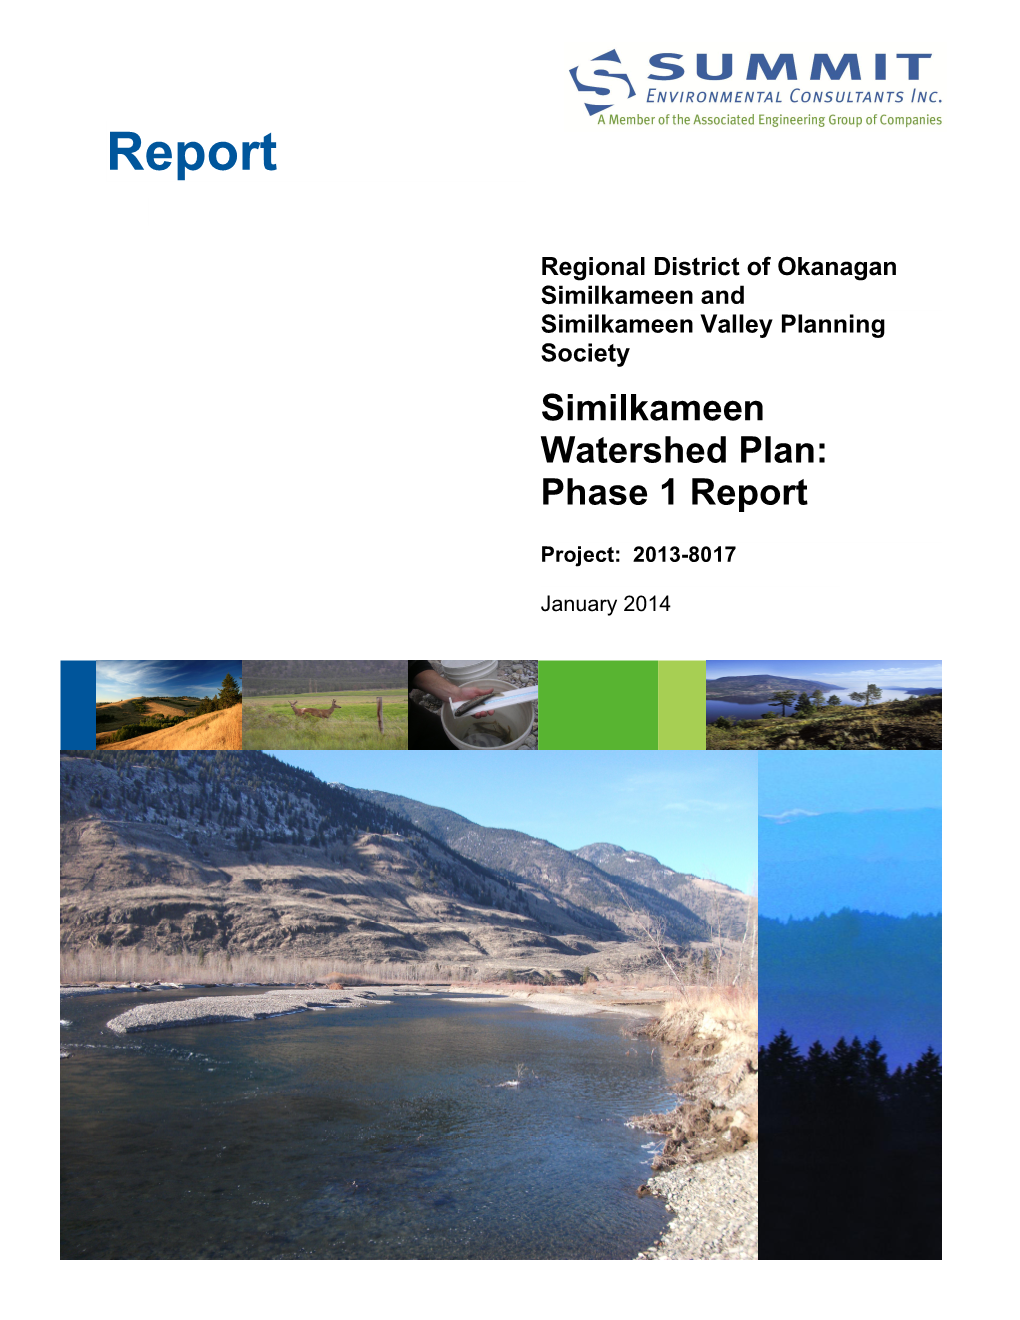 Similkameen Watershed Plan: Phase 1 Report